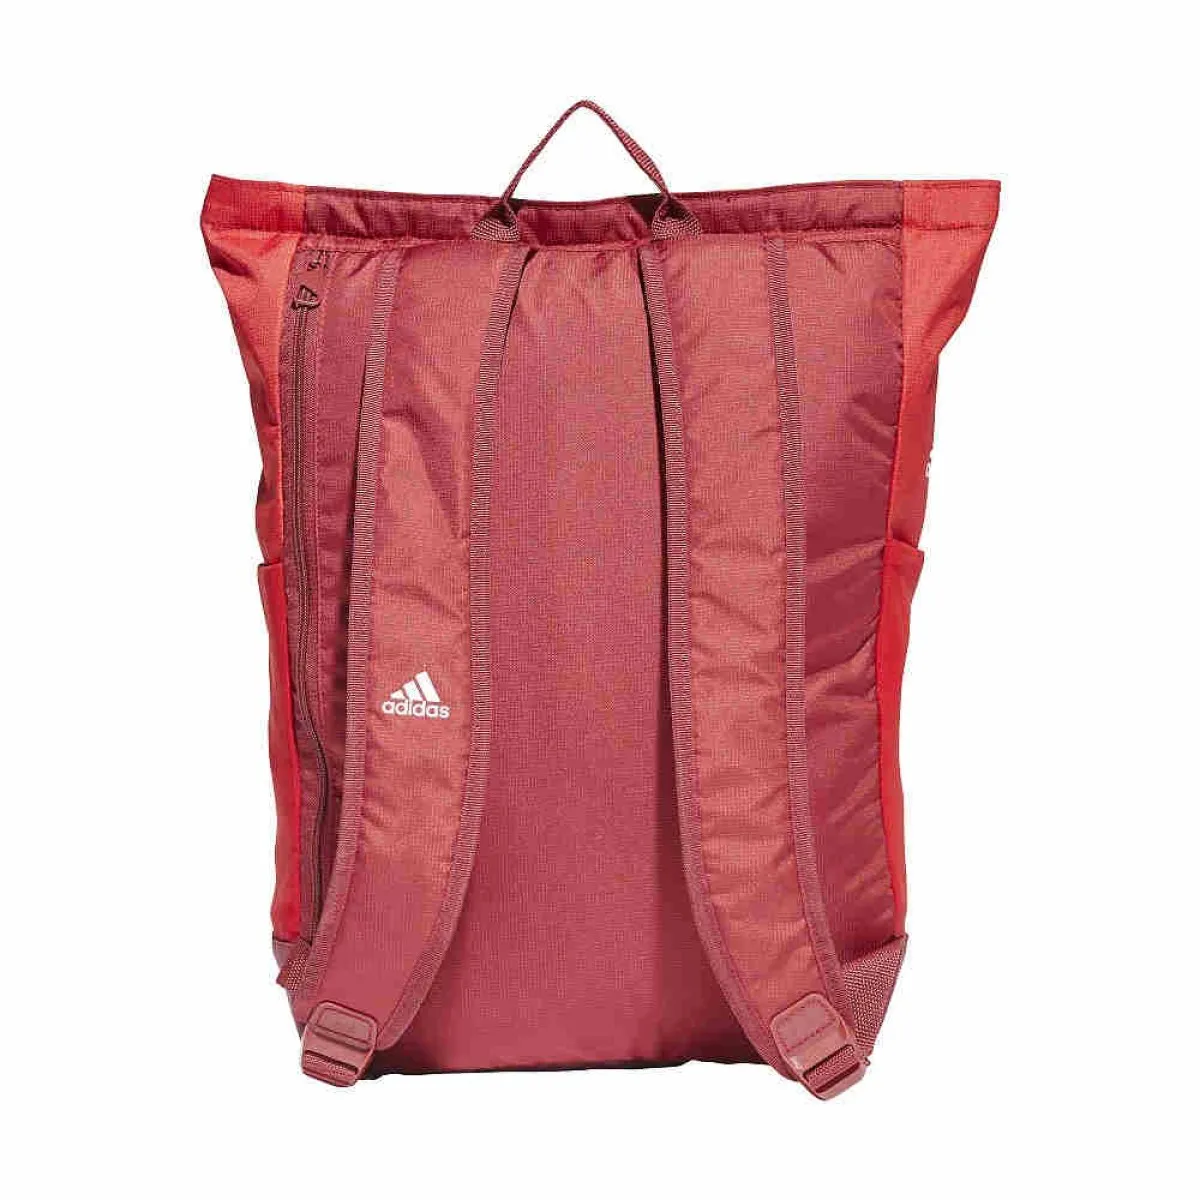 FC Bayern Munich backpack red